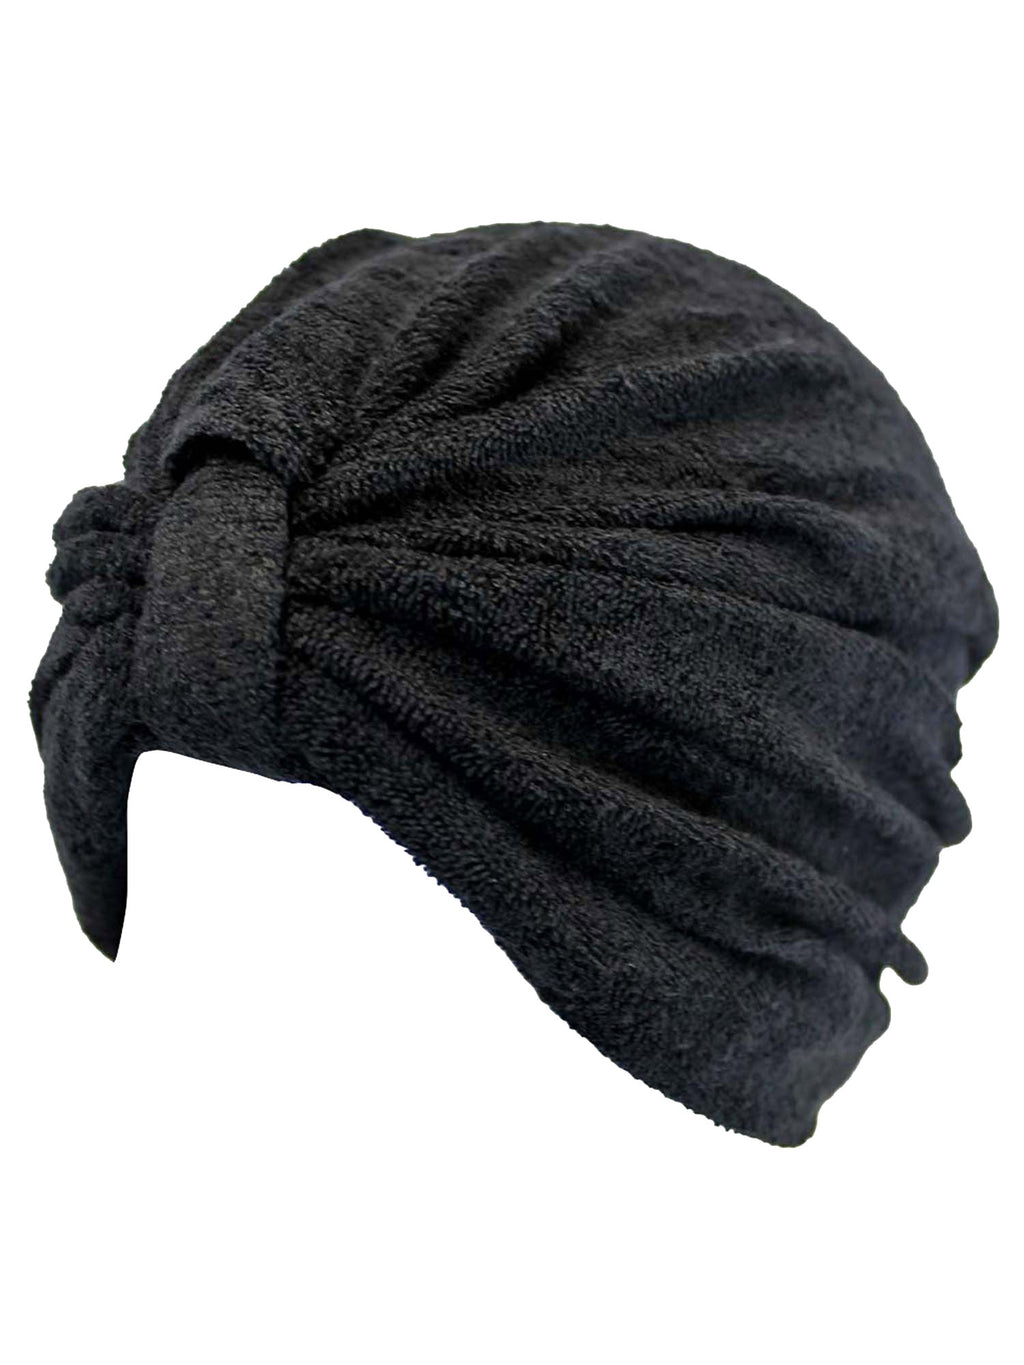 Soft Terry Cloth Turban Head Wrap